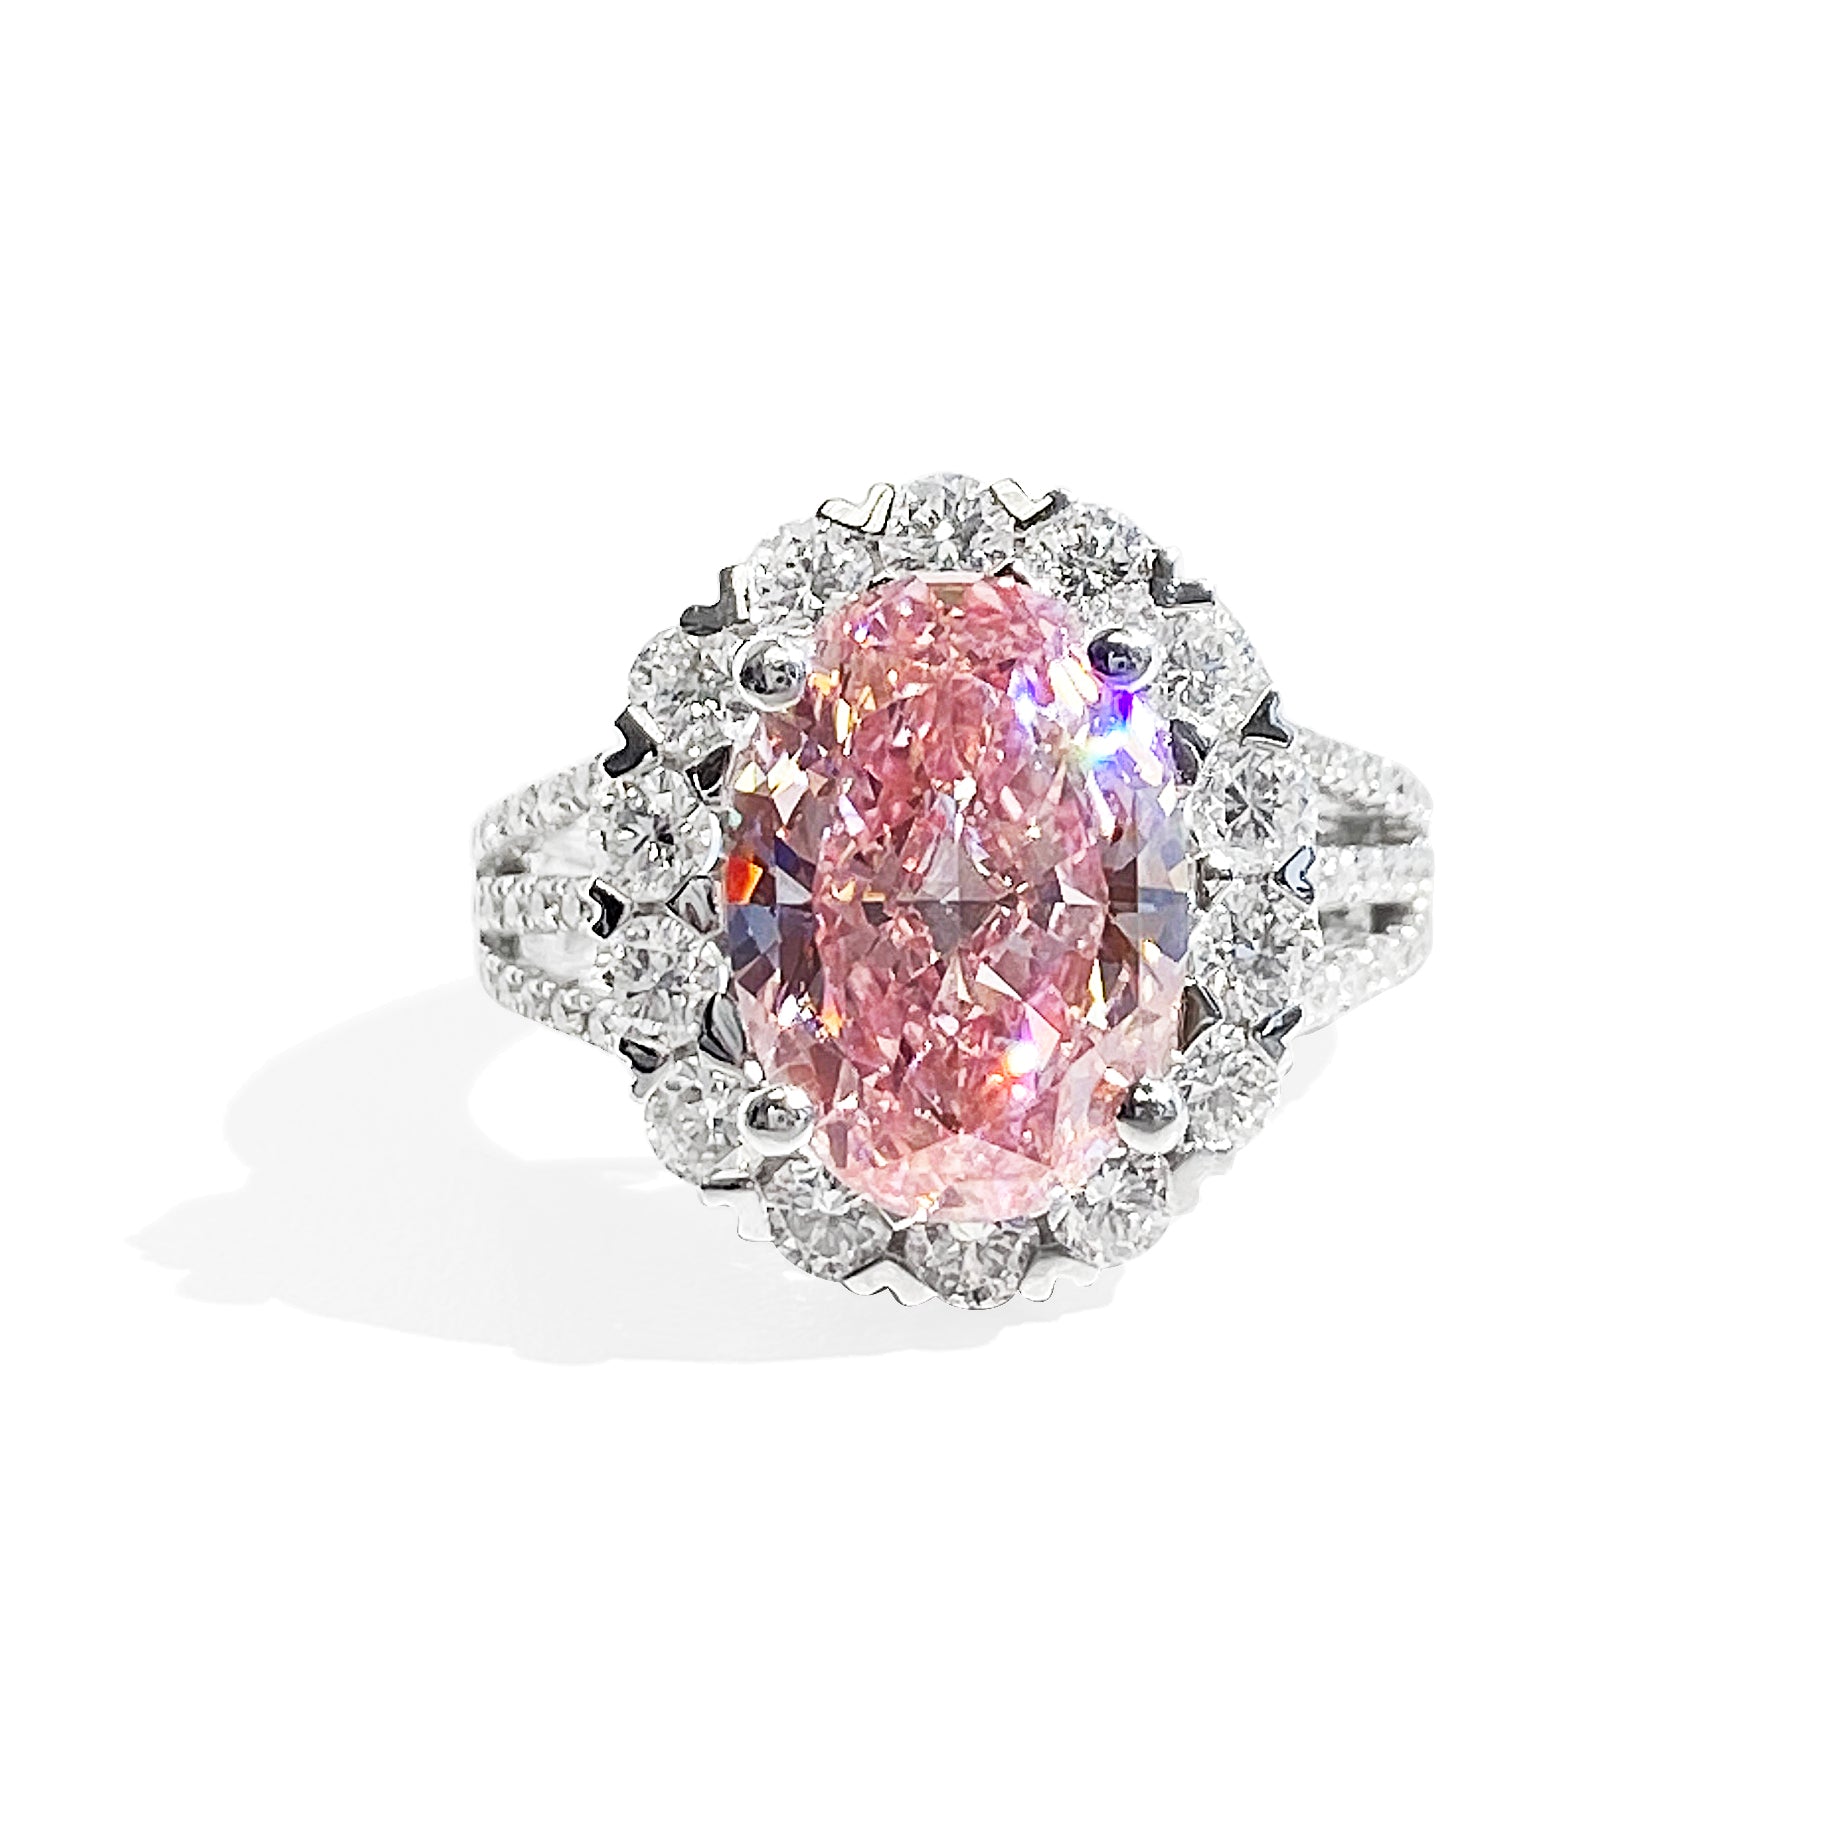 FLAWLESS! 3.60 Carat Pink Oval Diamond Halo Ring